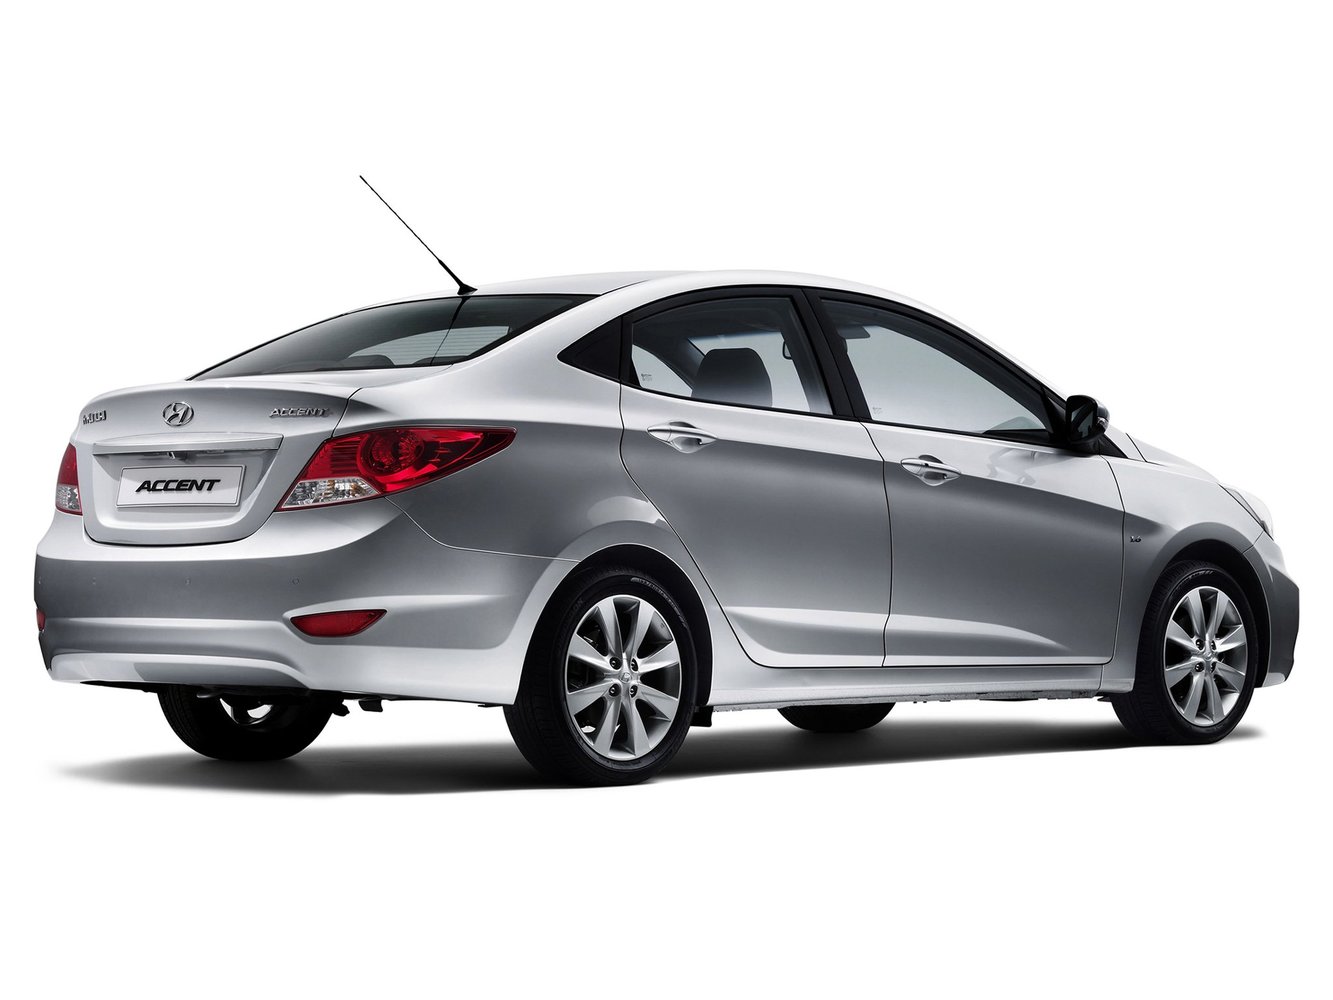 седан Hyundai Accent 2010 - 2016г выпуска модификация 1.4 AT (107 л.с.)